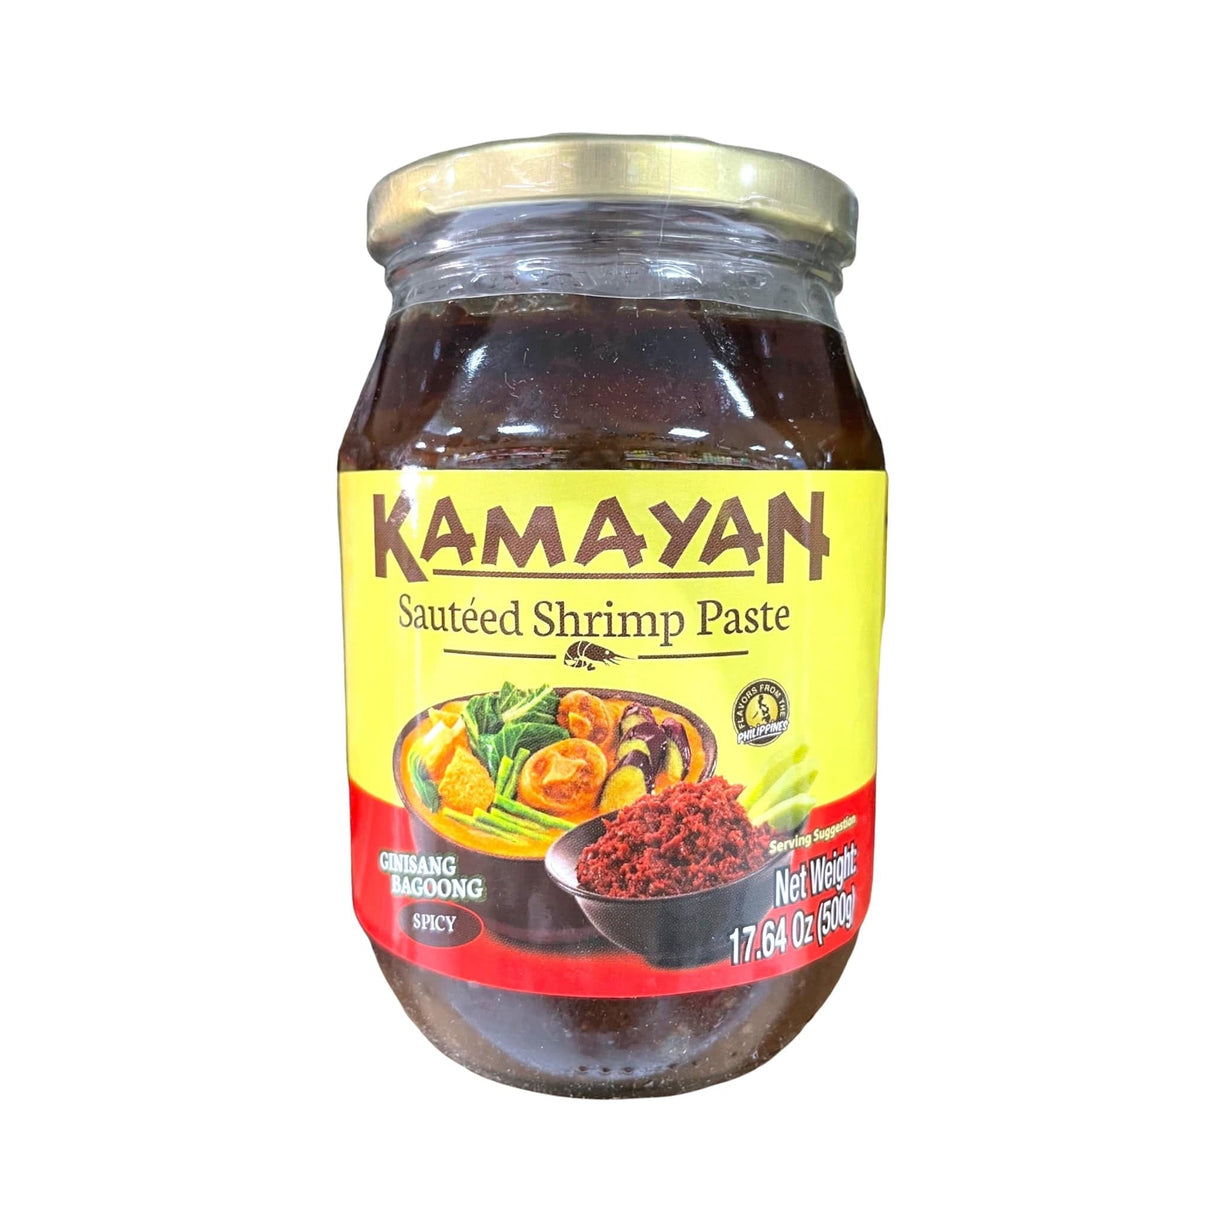 Fish & Seafood Products - Kamayan Sauteed Shimp Paste (Spicy)